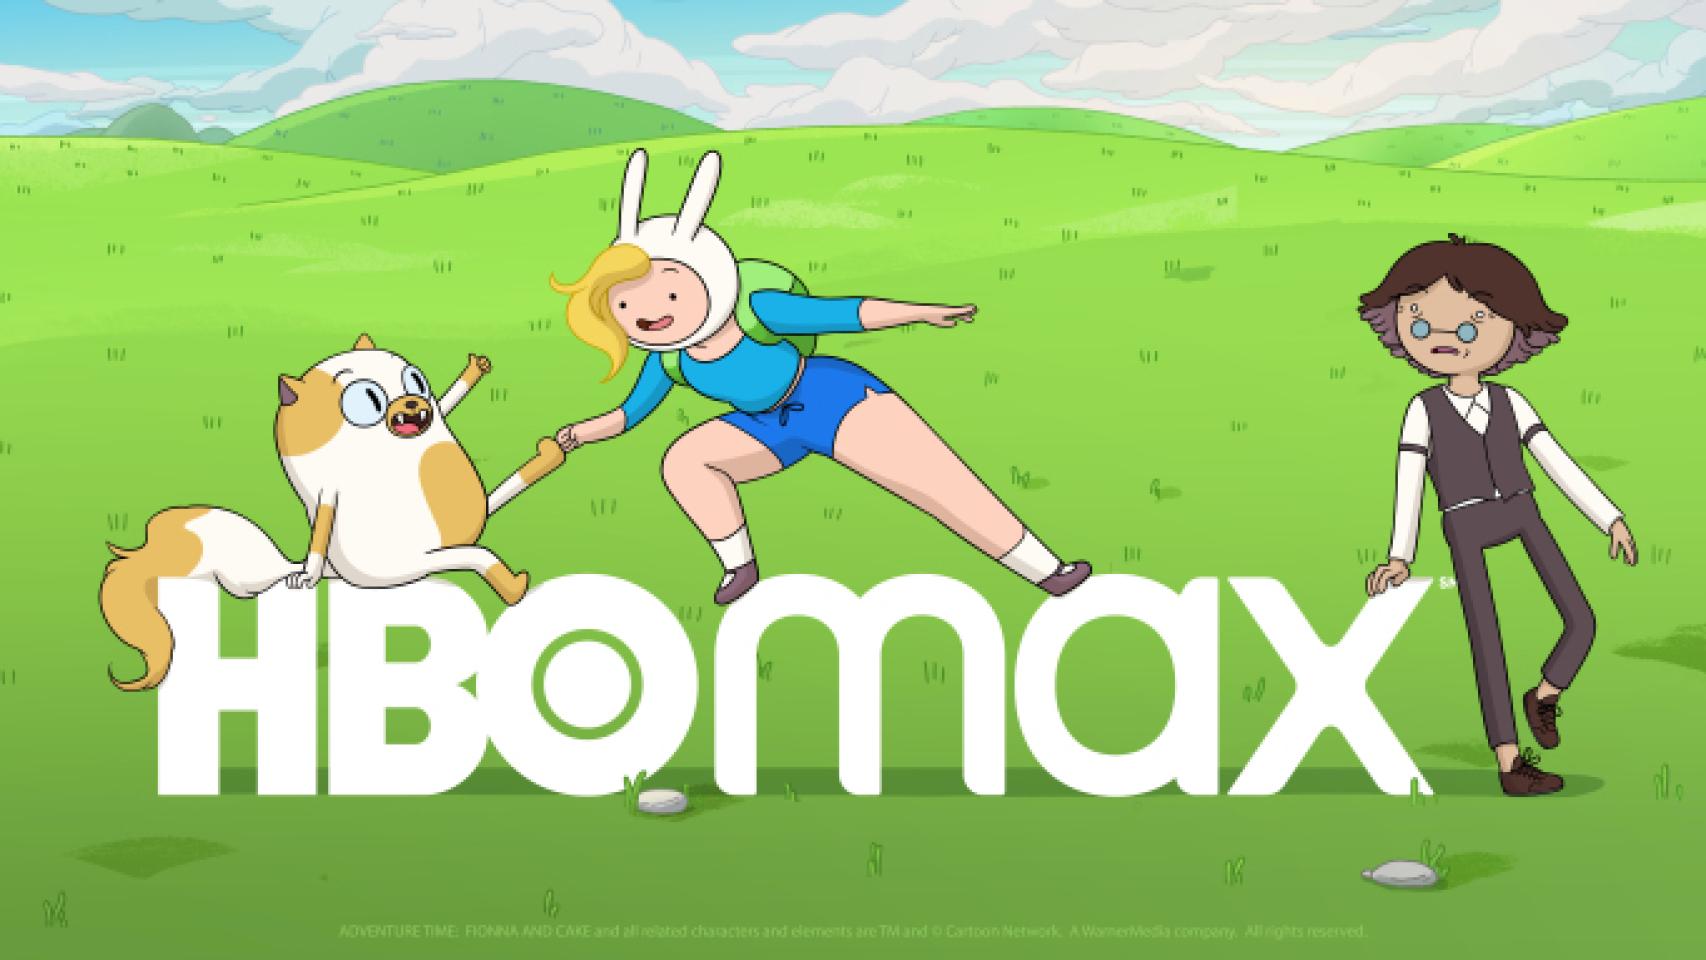 Adventure Time: Fionna & Cake': HBO Max pone en marcha un spin-off